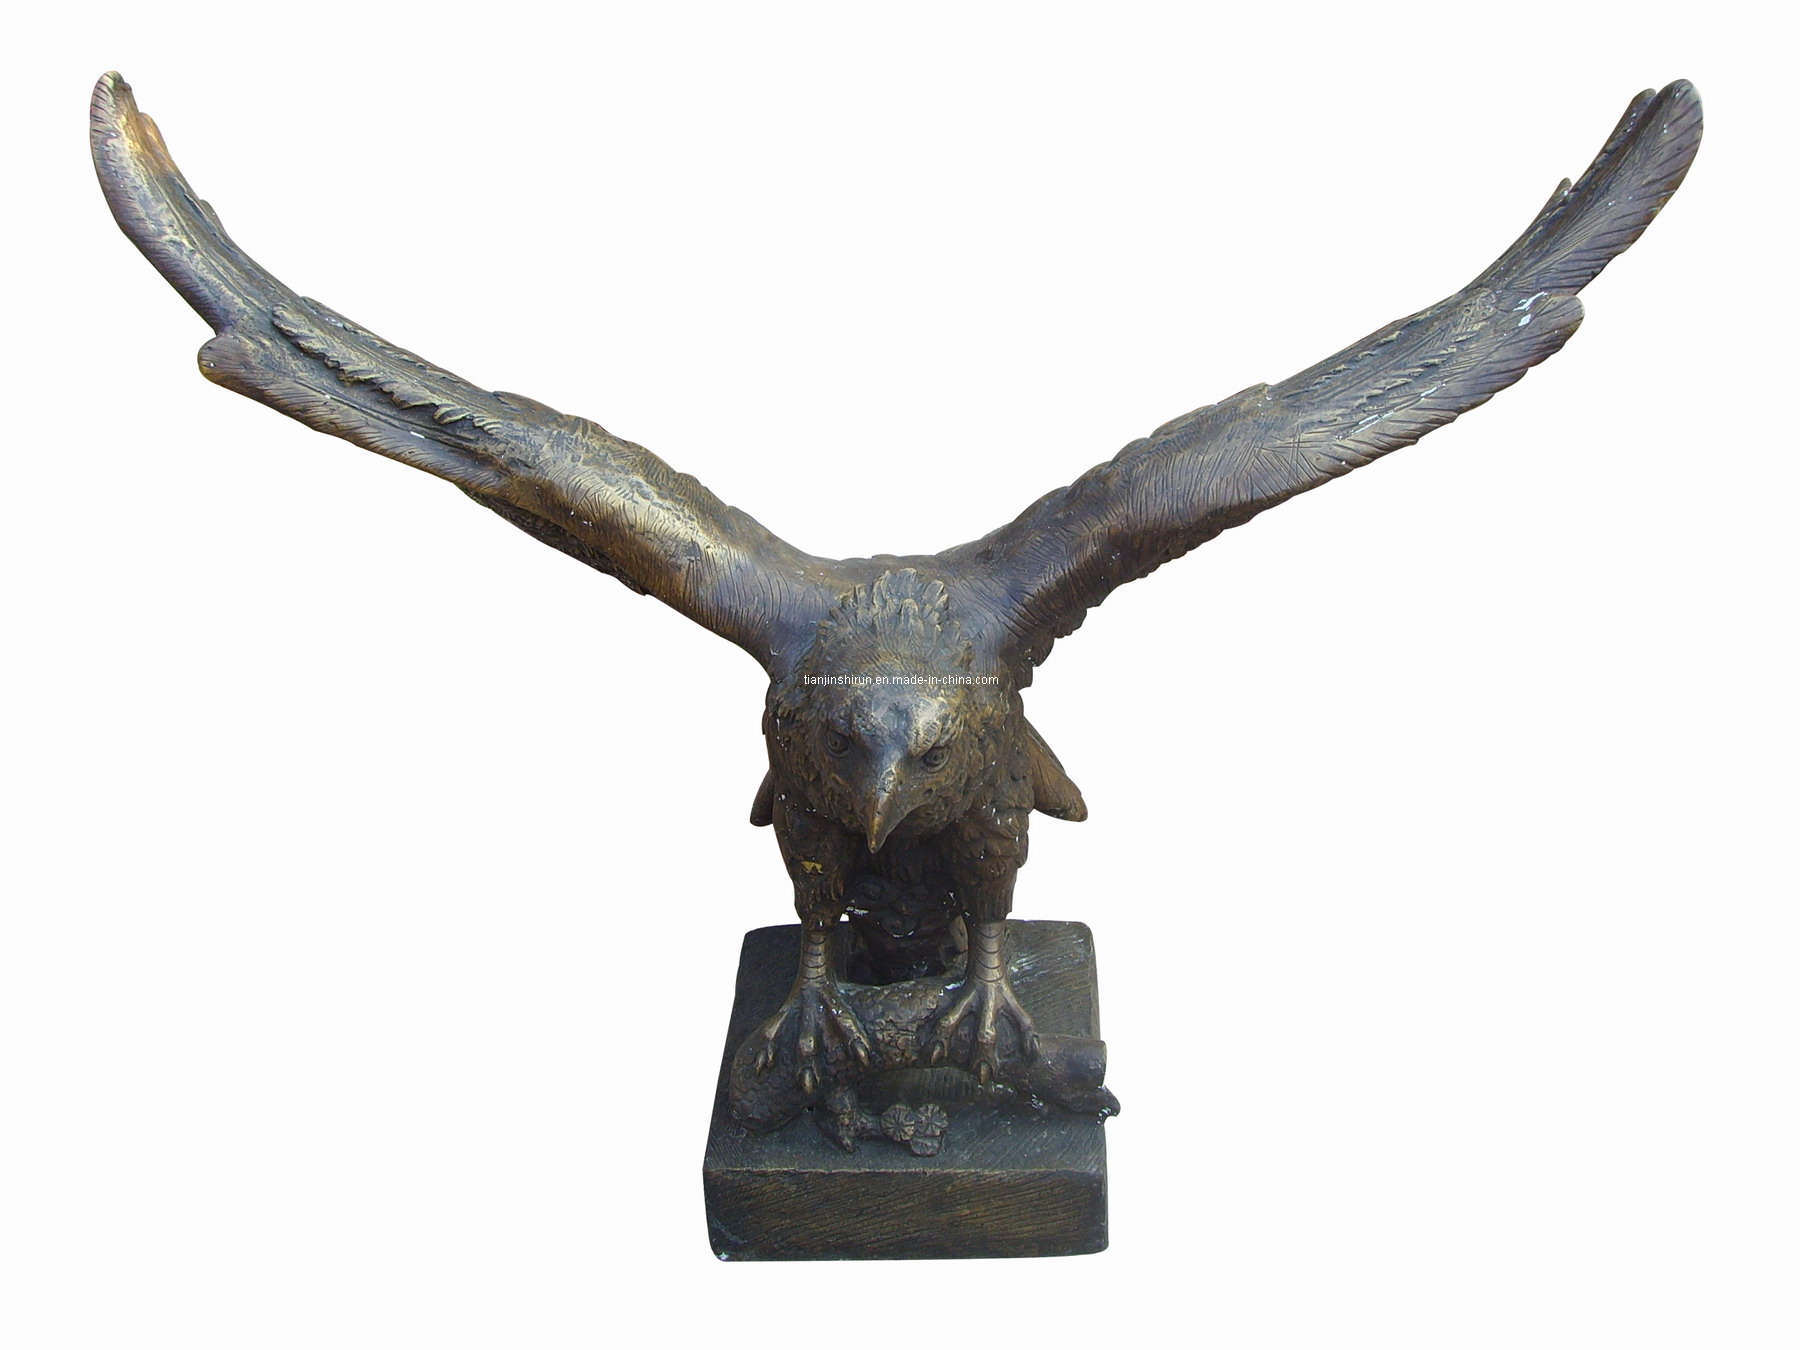 Bronze Eagle Sculpture (SL812)